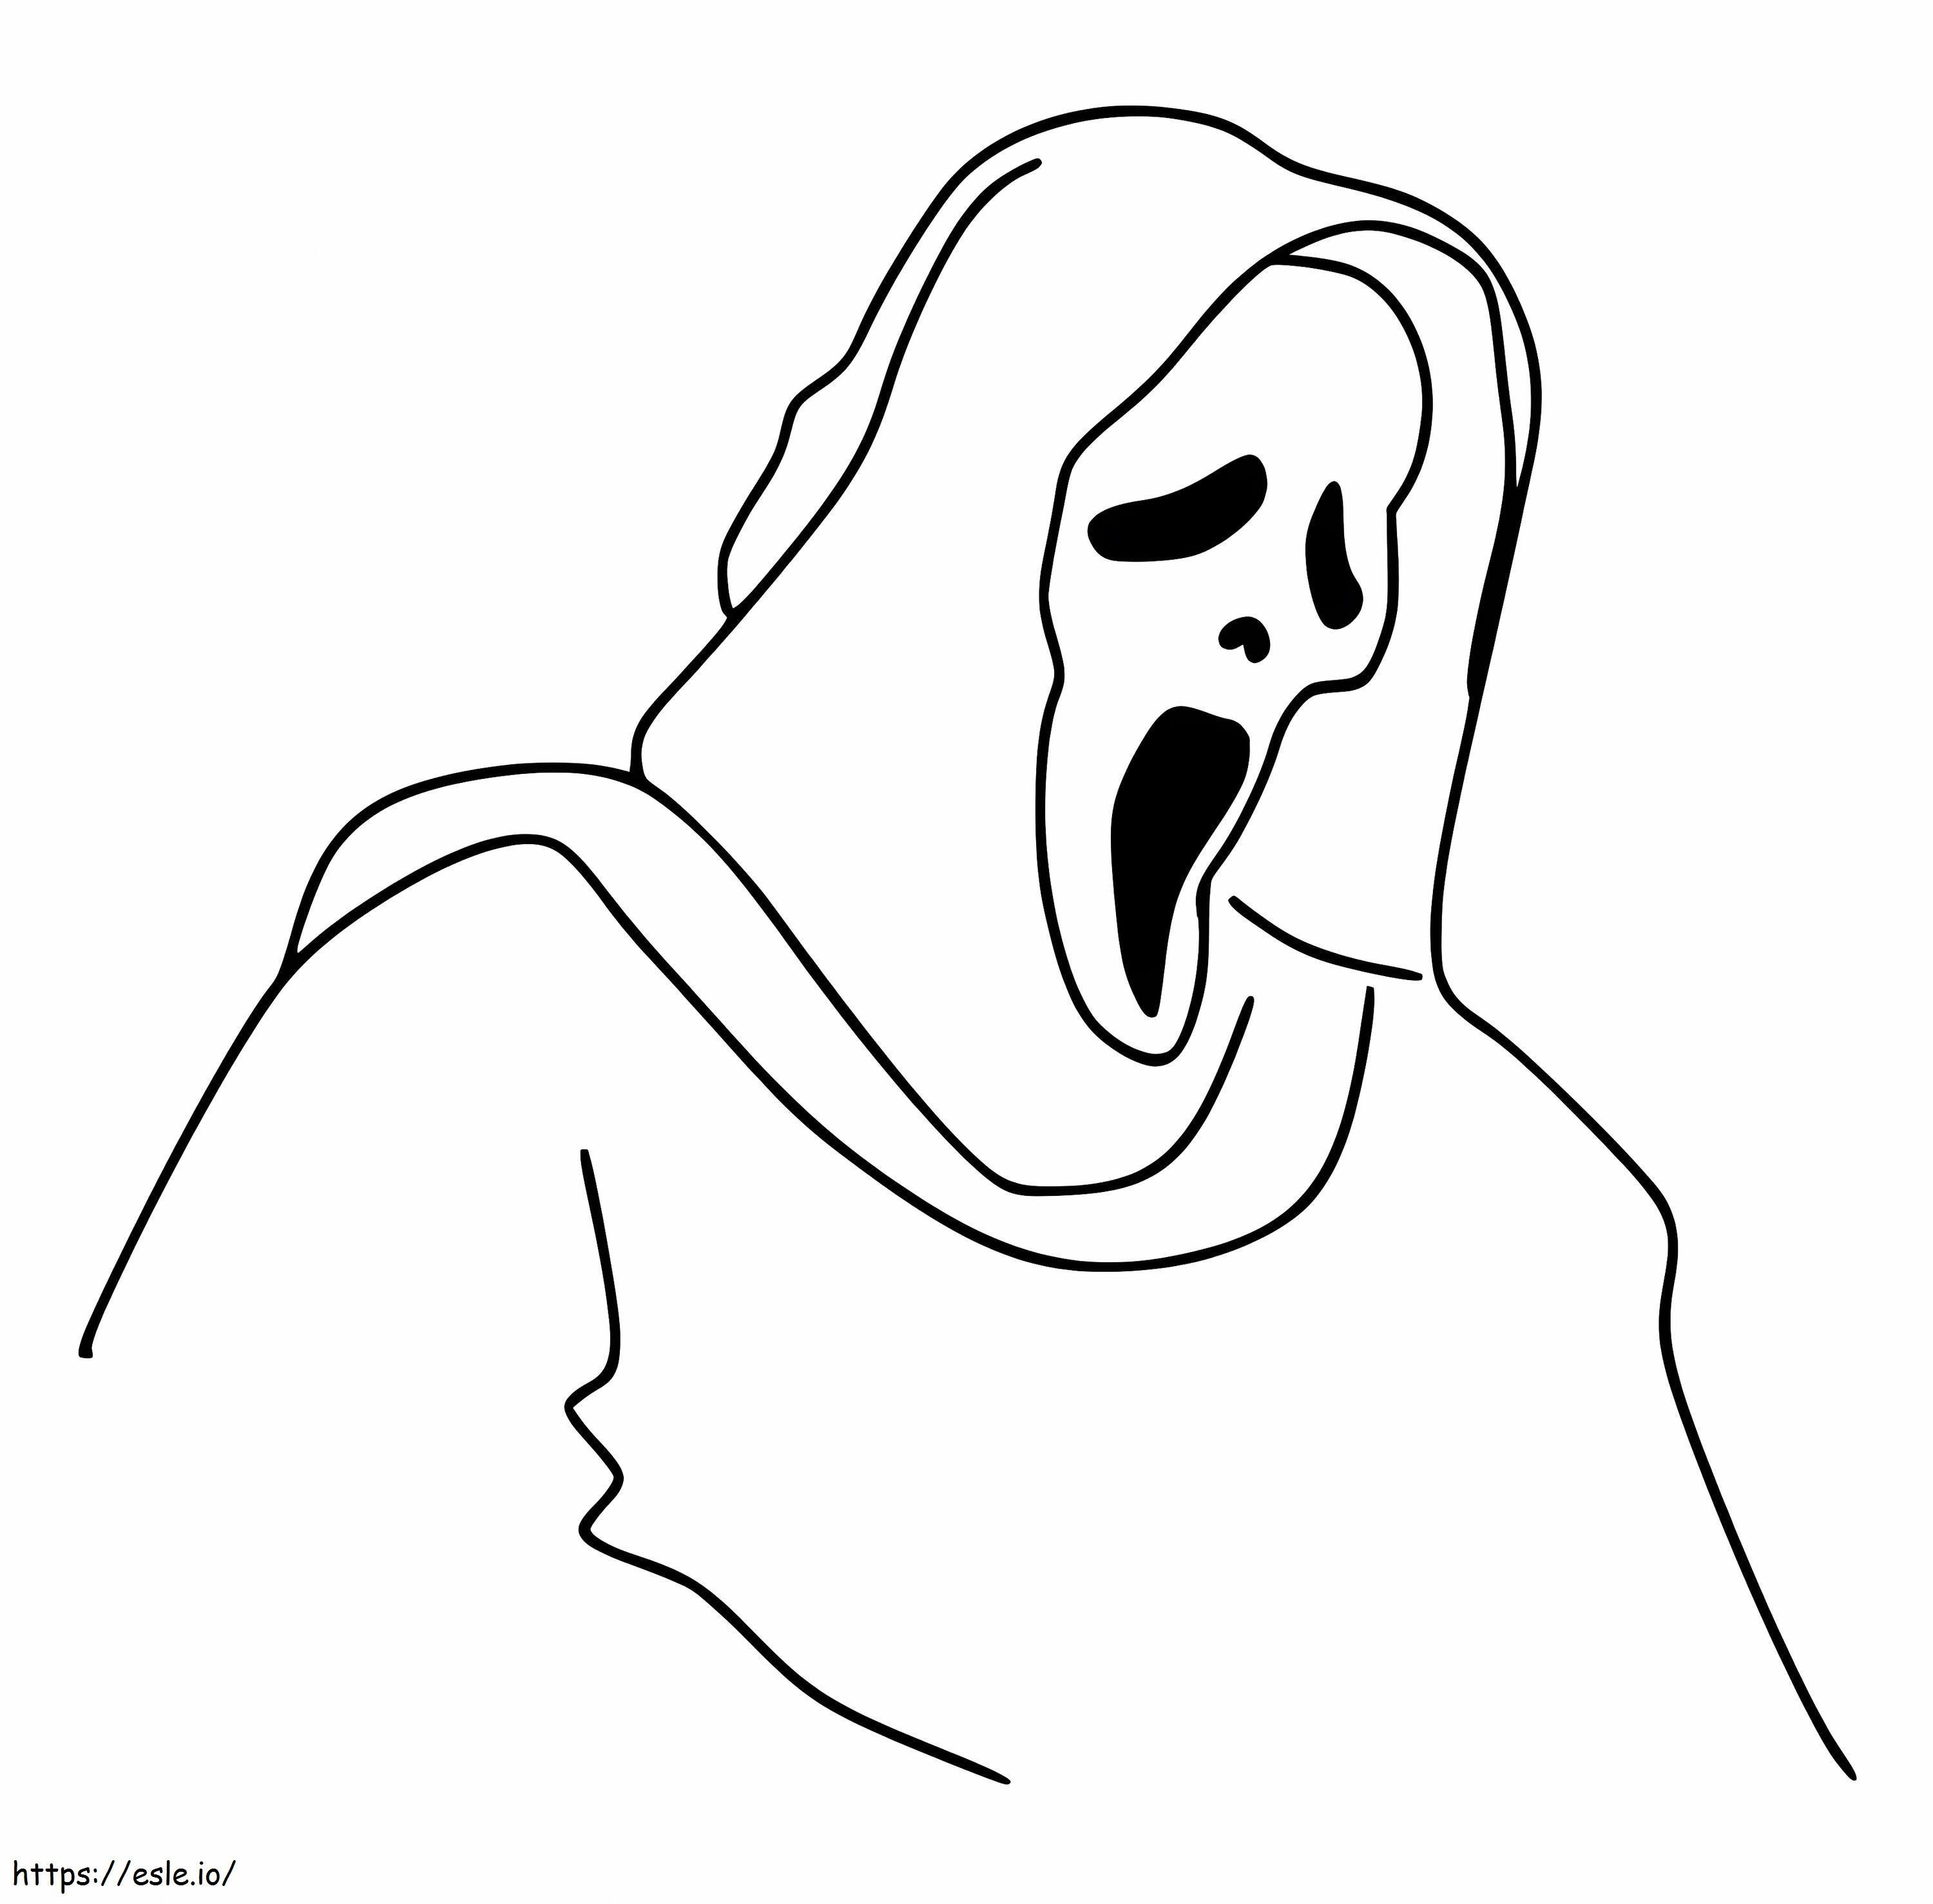 Cara de fantasma de Halloween para colorir